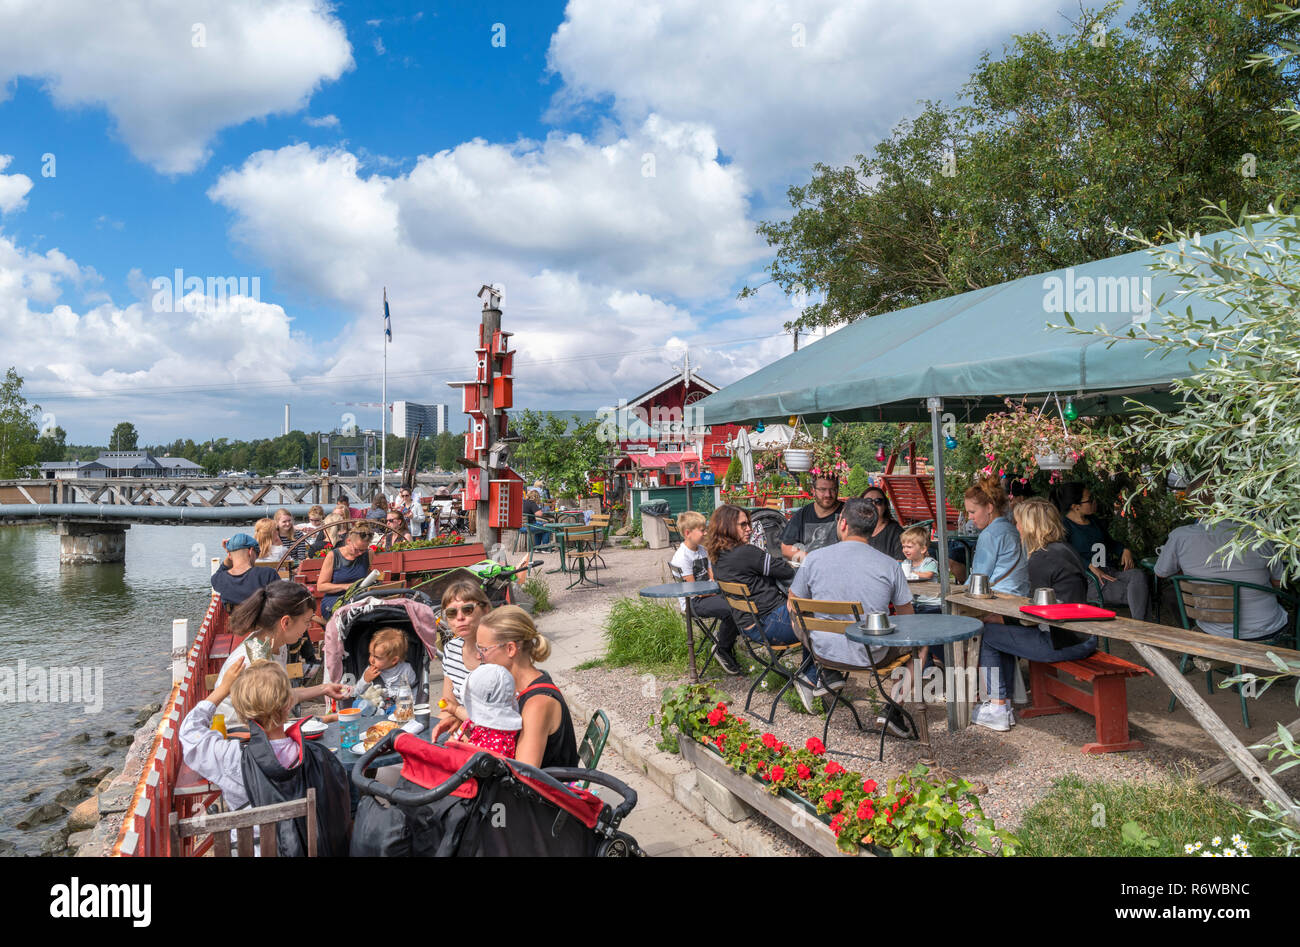 The Cafe Regatta on the waterfront in Töölö, Helsinki, Finland Stock Photo